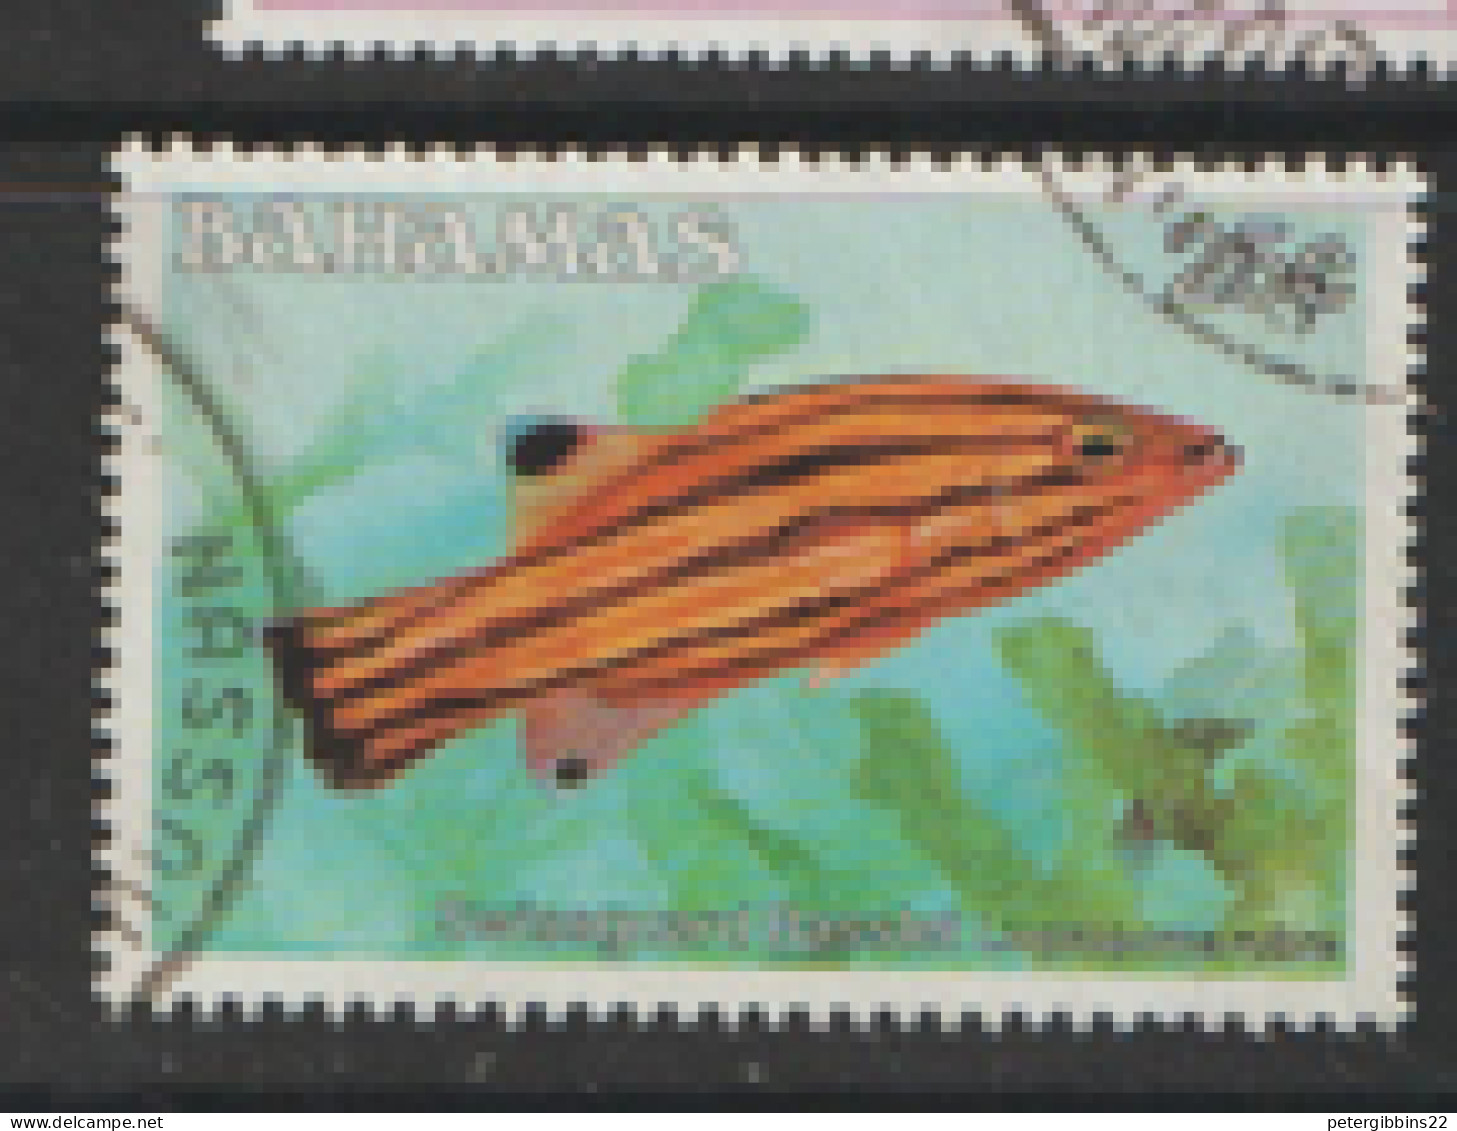 Bahamas 1986  SG 762a Basslet   Fine Used - Bahamas (1973-...)